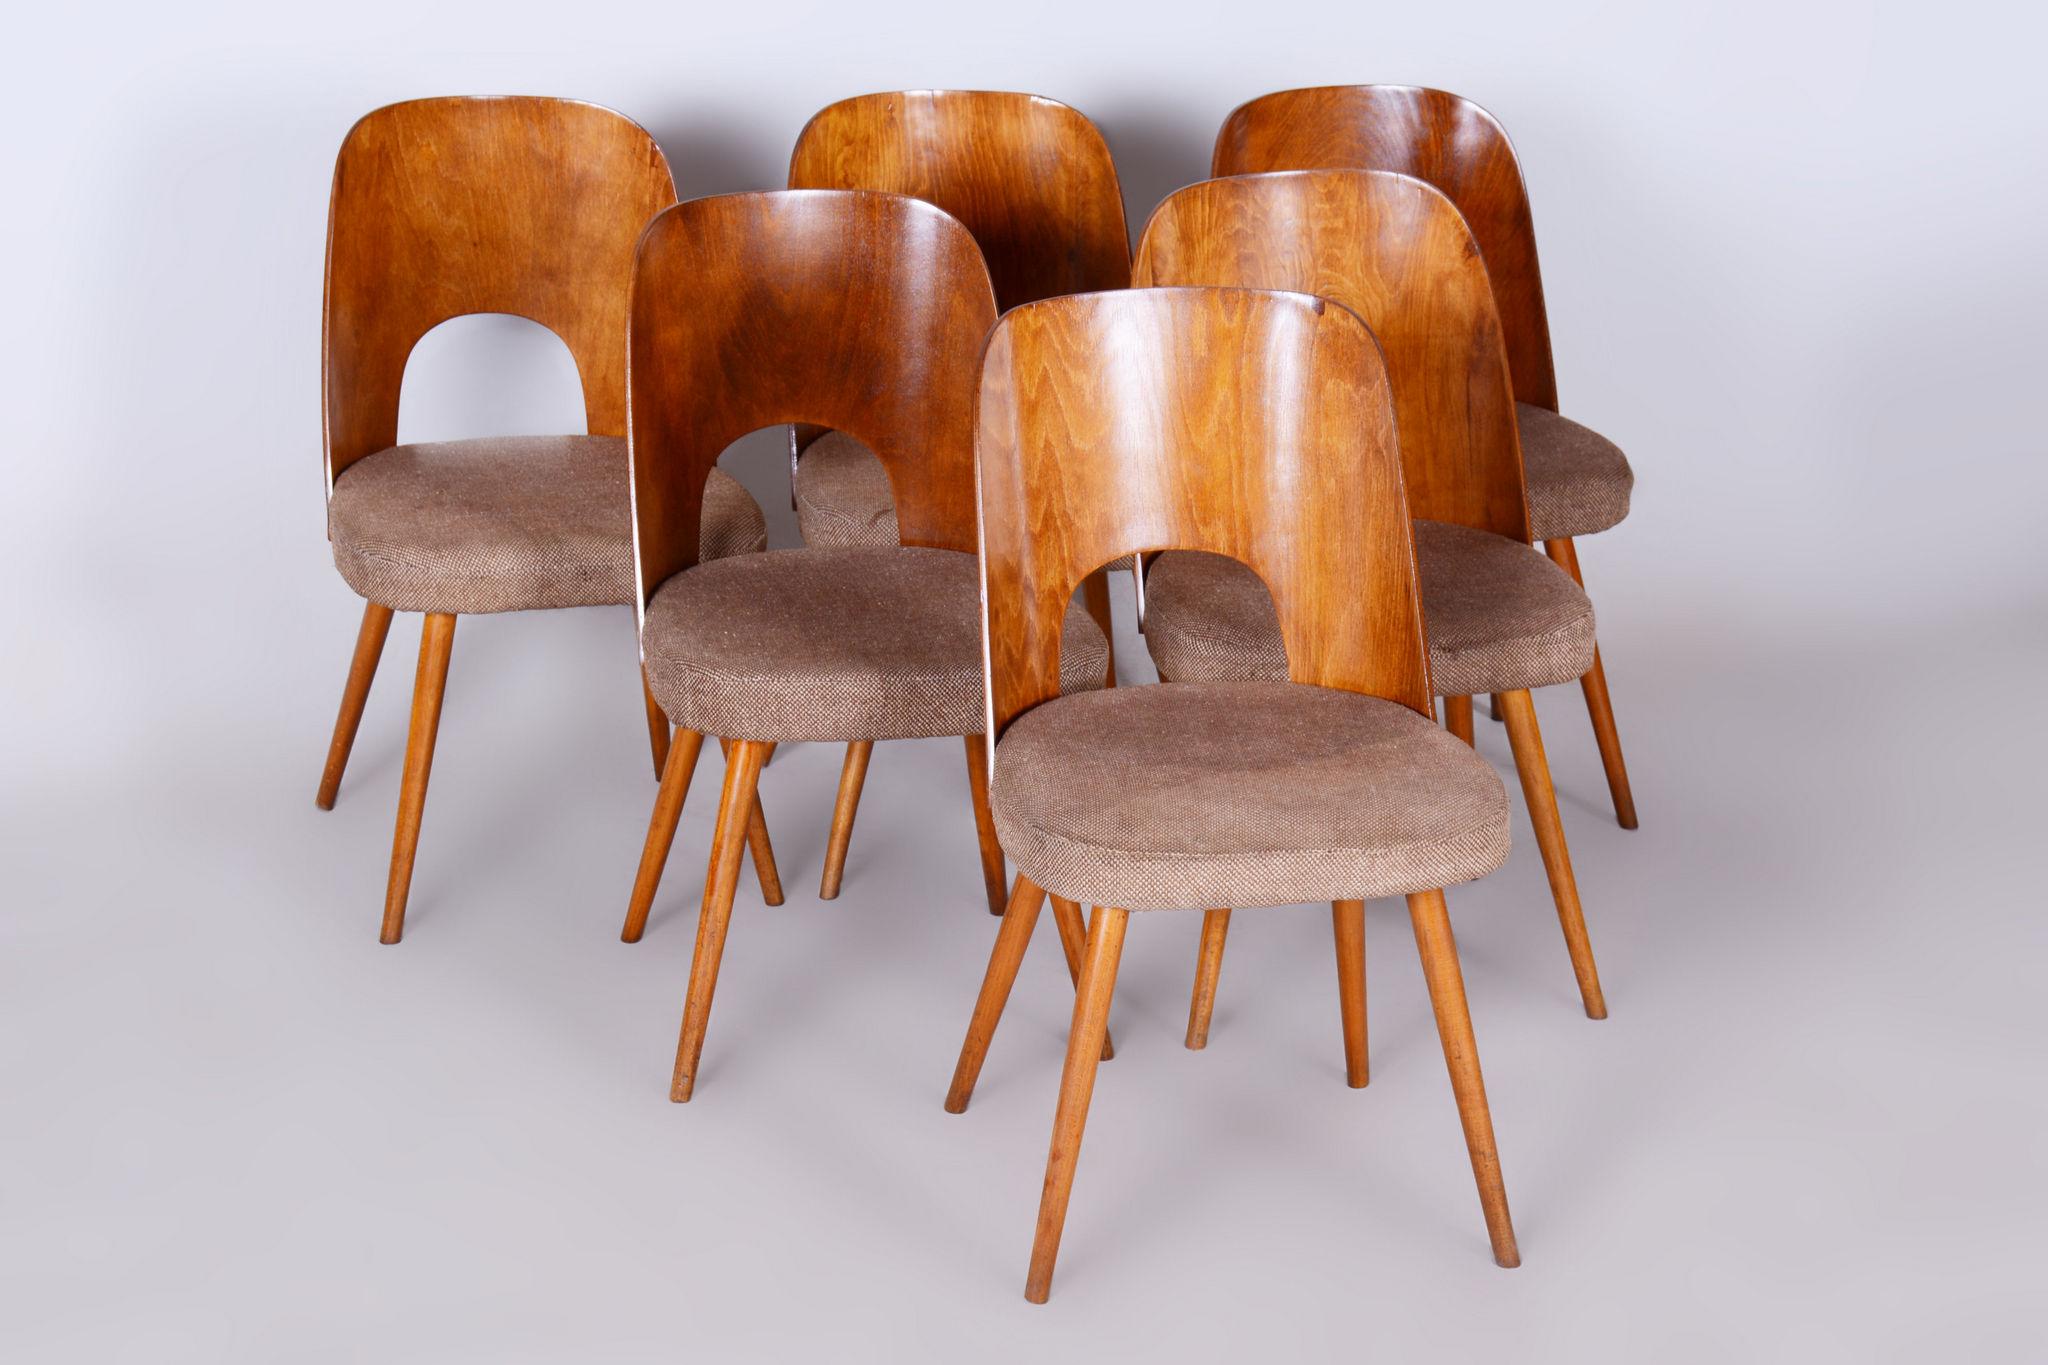 Mid-20th Century Set of Six Restored Mid-Century Modern Chairs, Beech, Czechia, 1950-1959